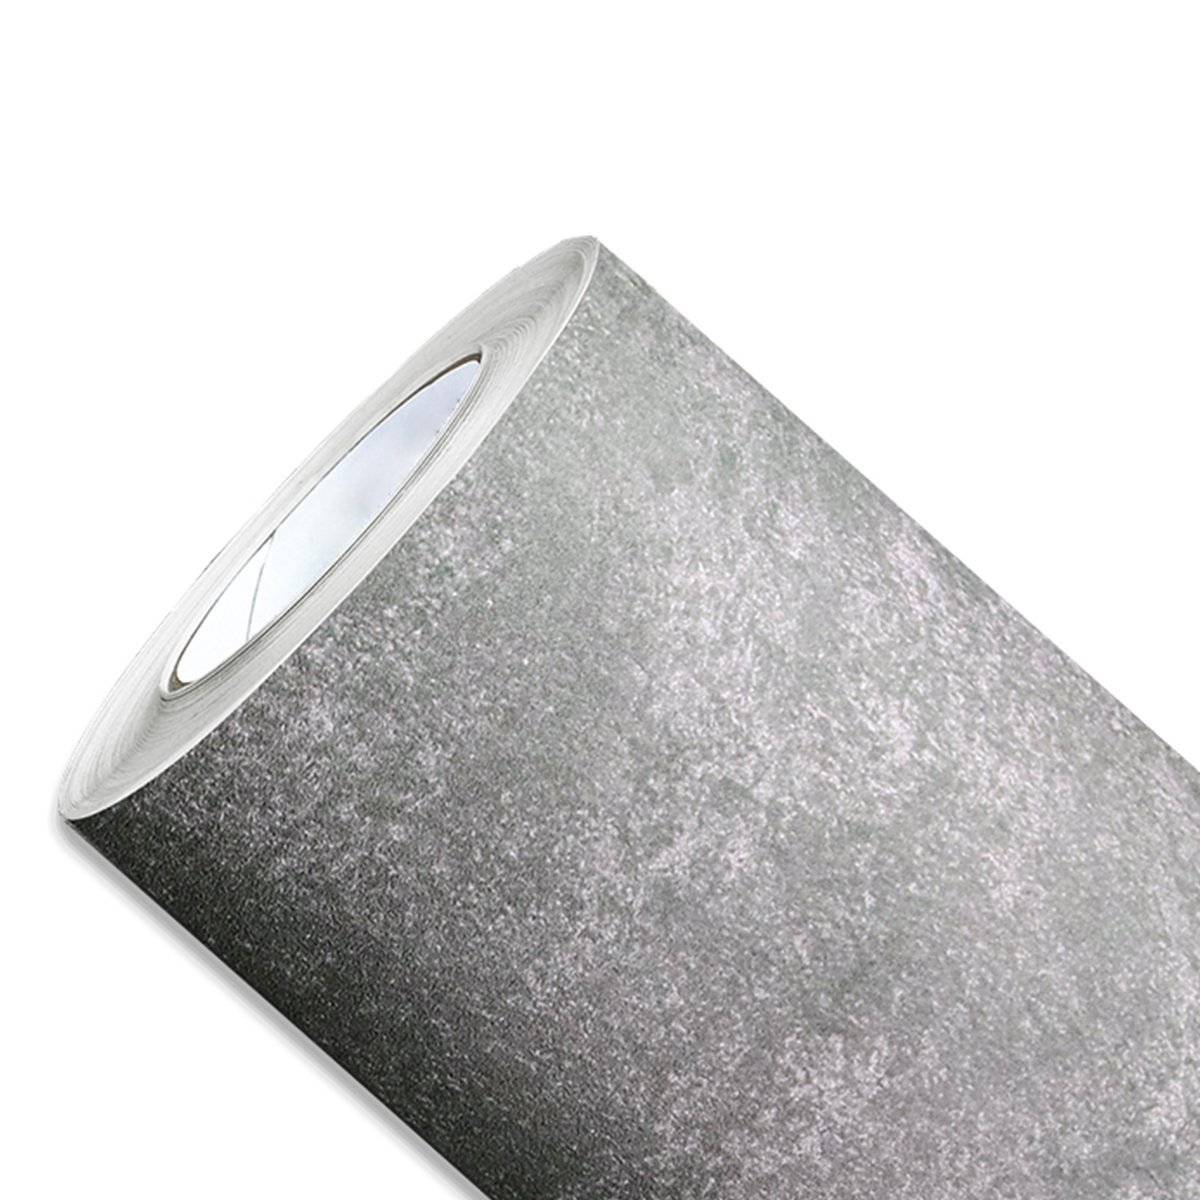 Vinil Adesivo Cimento Queimado Papel de Parede Concreto Estilo Industrial Fosco Leve Textura Decoraç